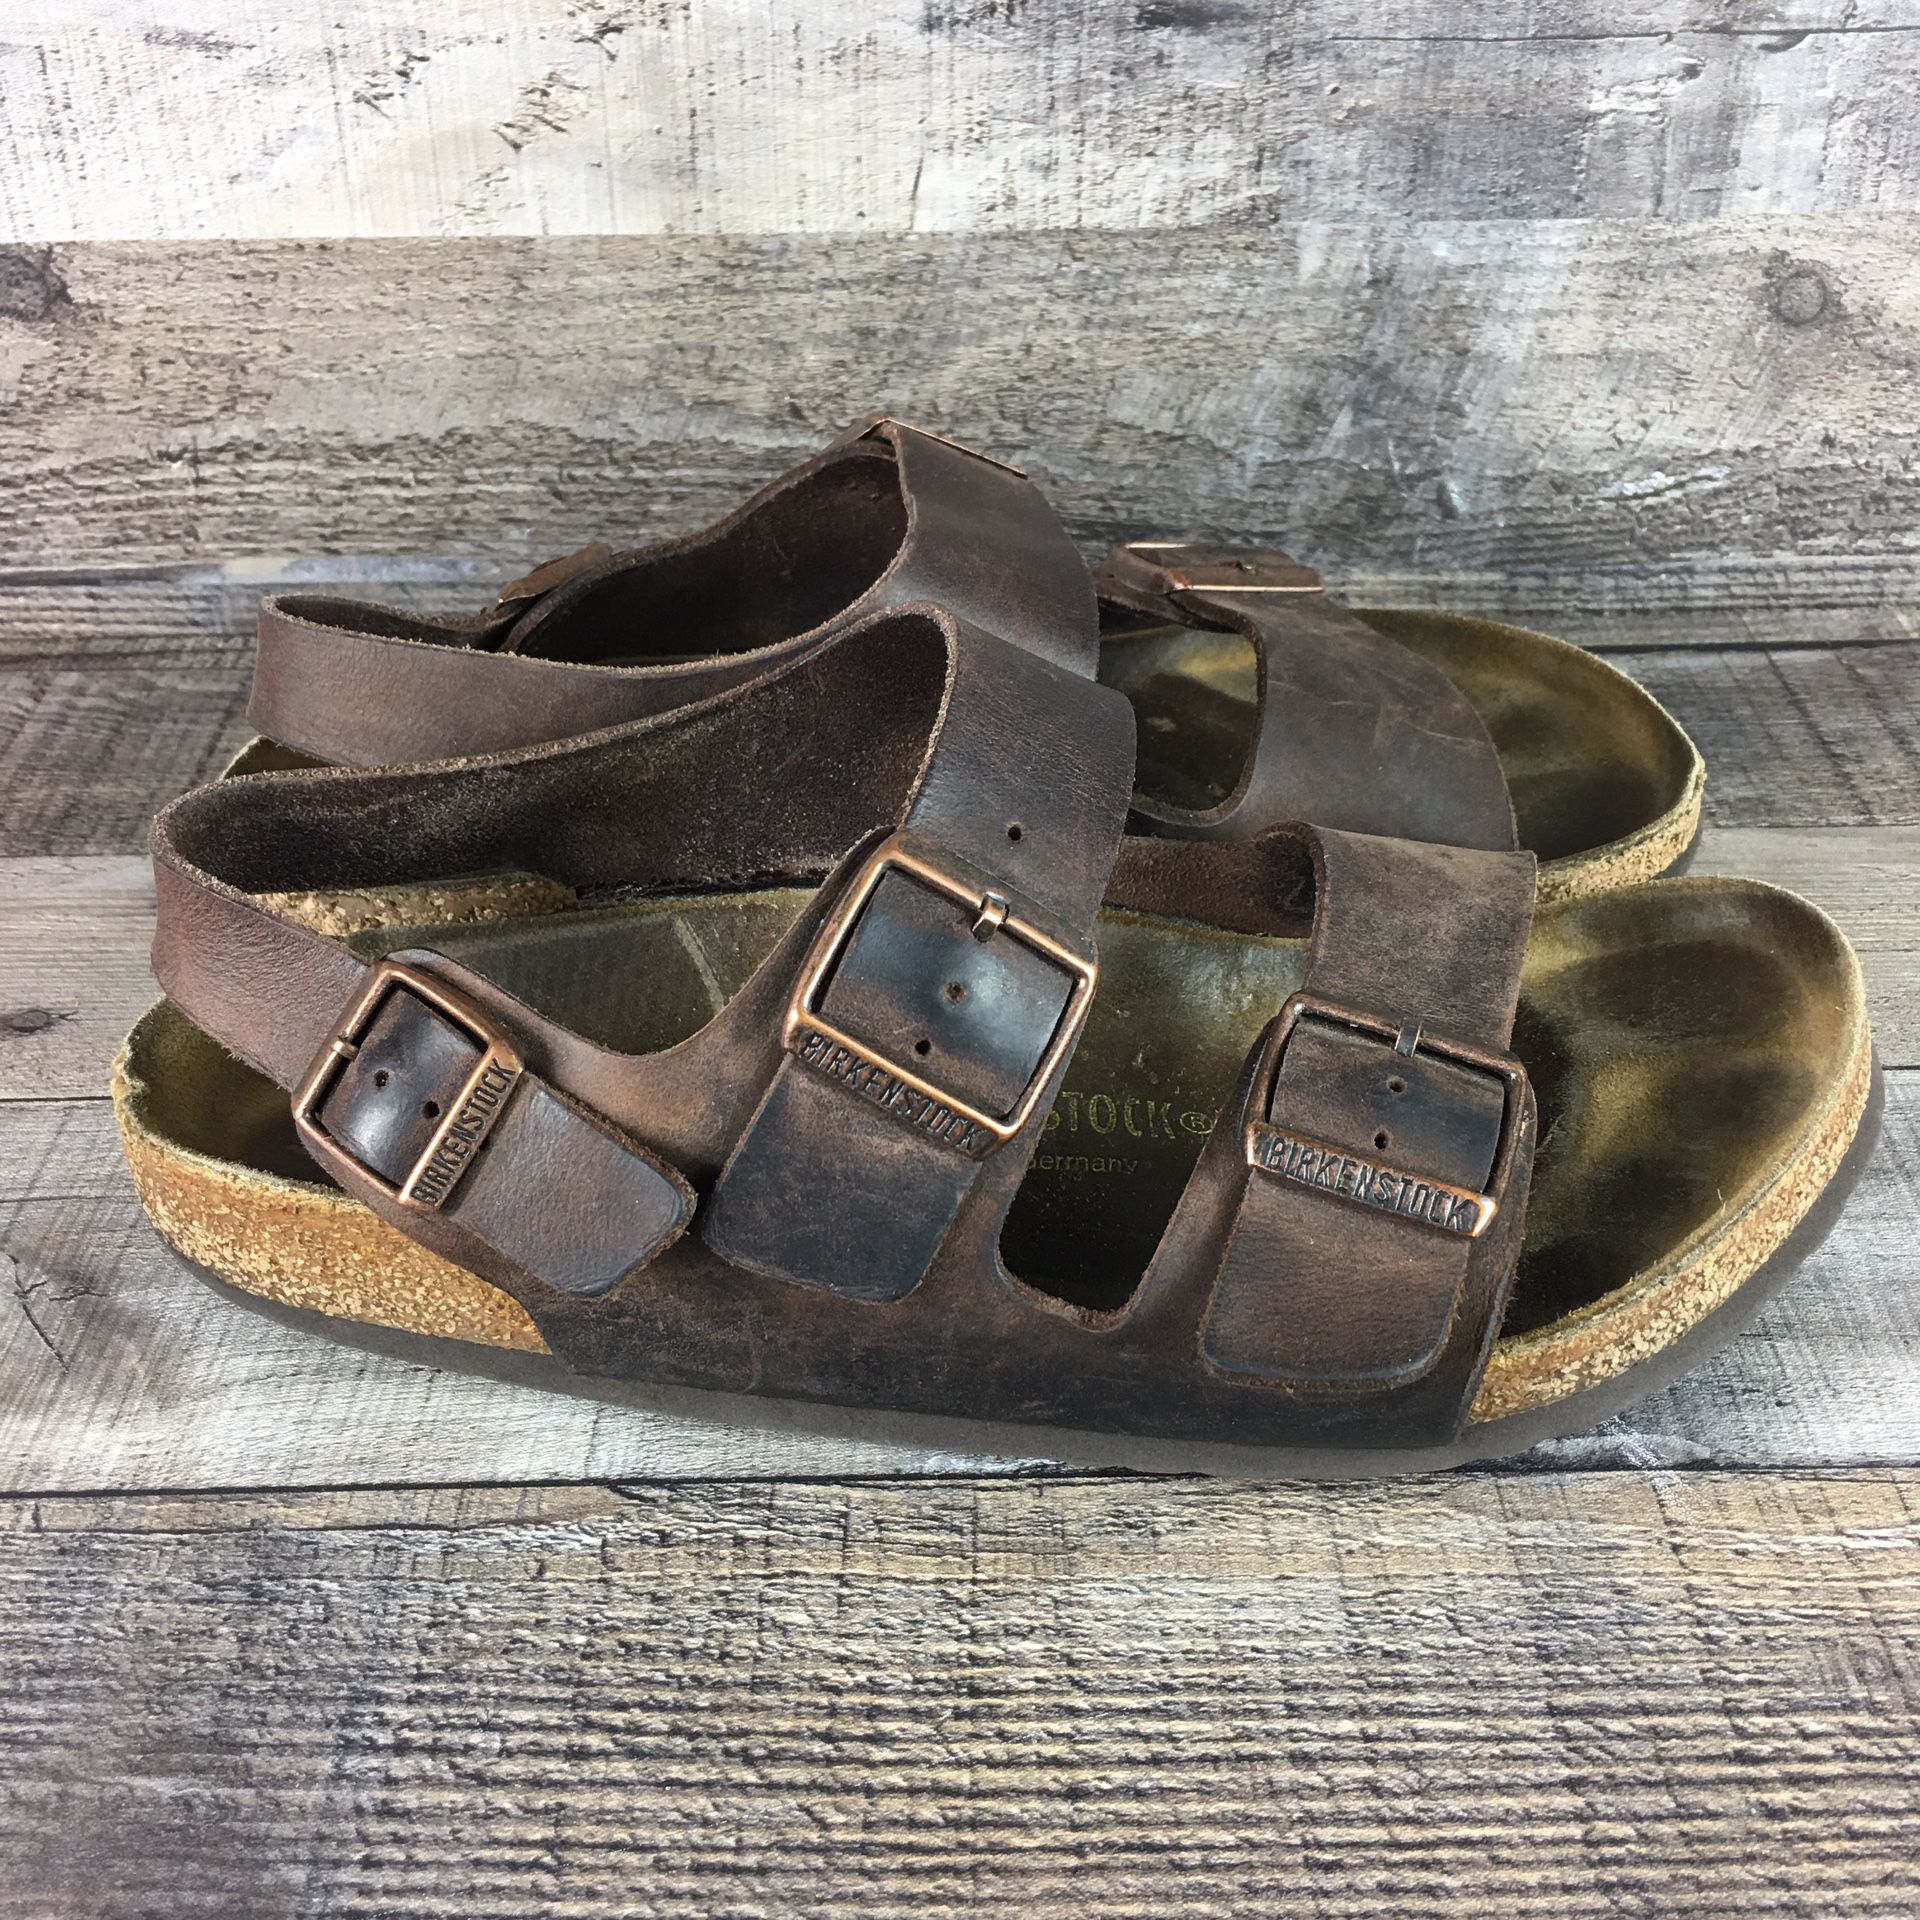 Birkenstock Brown Leather Sandals Arizona Buckle Straps Size 40 260 L9 M7